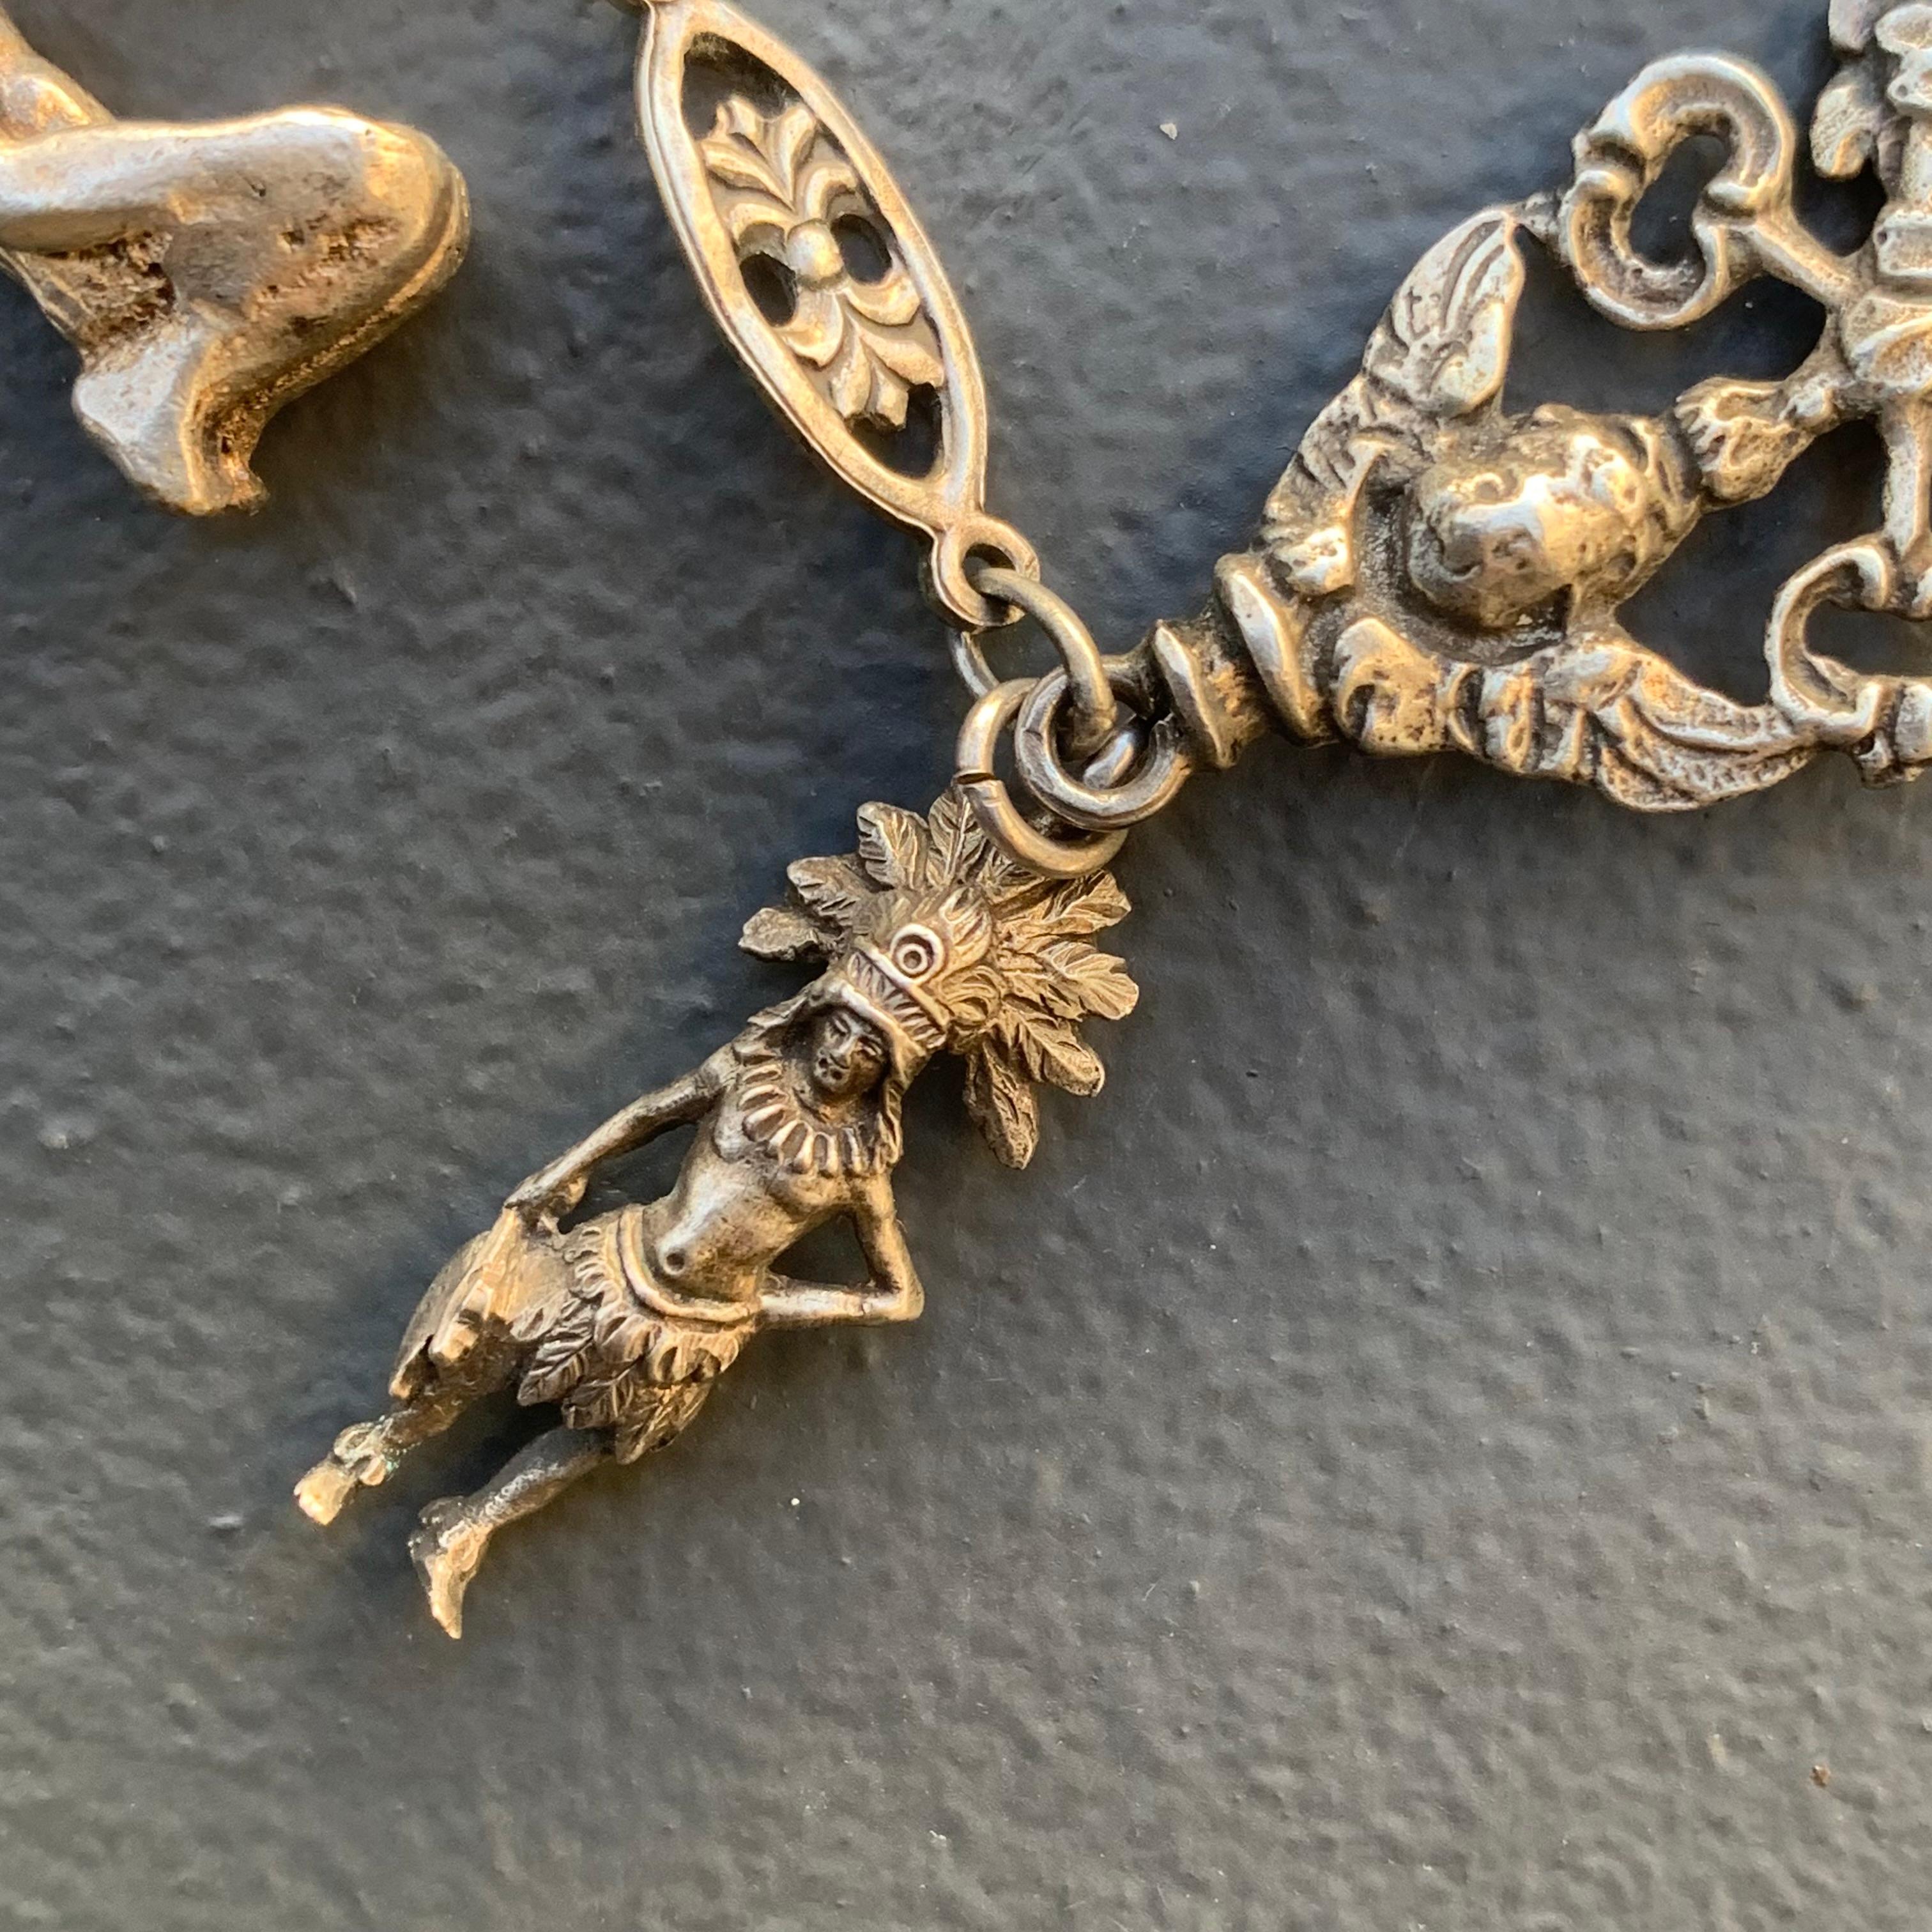 Extortionary Peruzzi A Bianchi Ponte Vecchio 800 Silver Pendant Charm Necklace For Sale 2